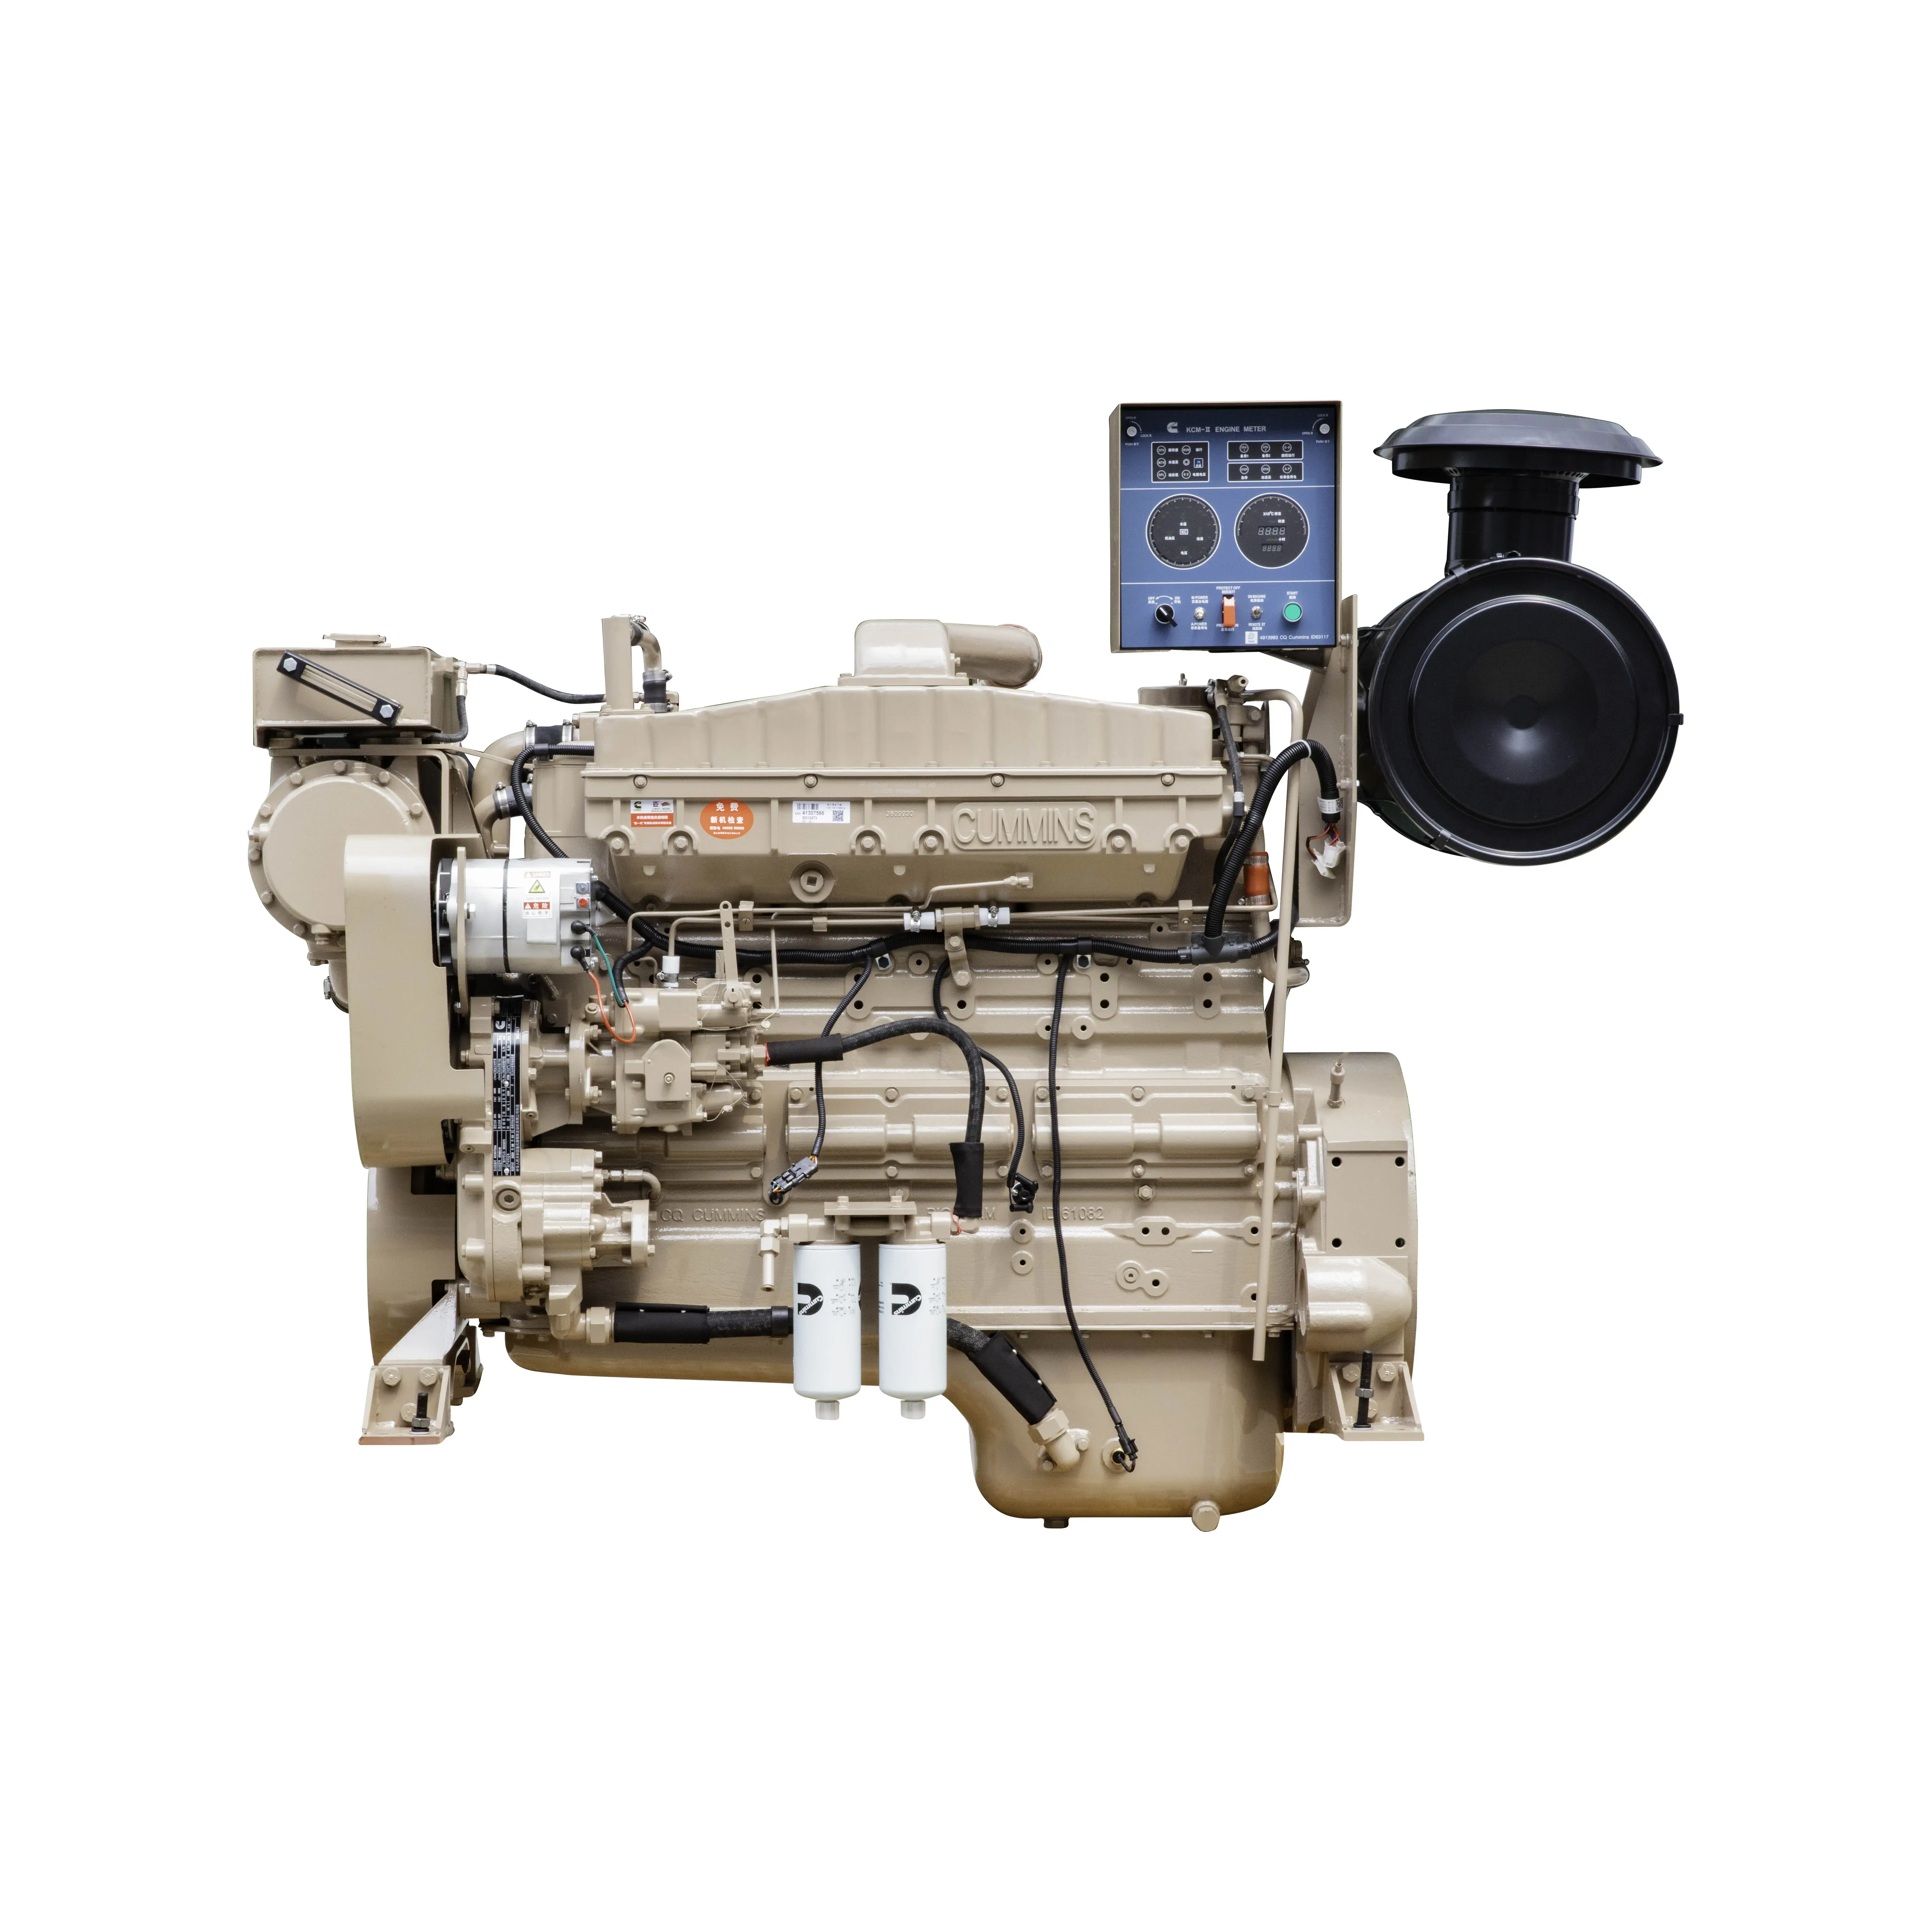 Brand new cummins 330KW 6 Cylinders 4 Stroke Marine Diesel Engine NTA855-M450